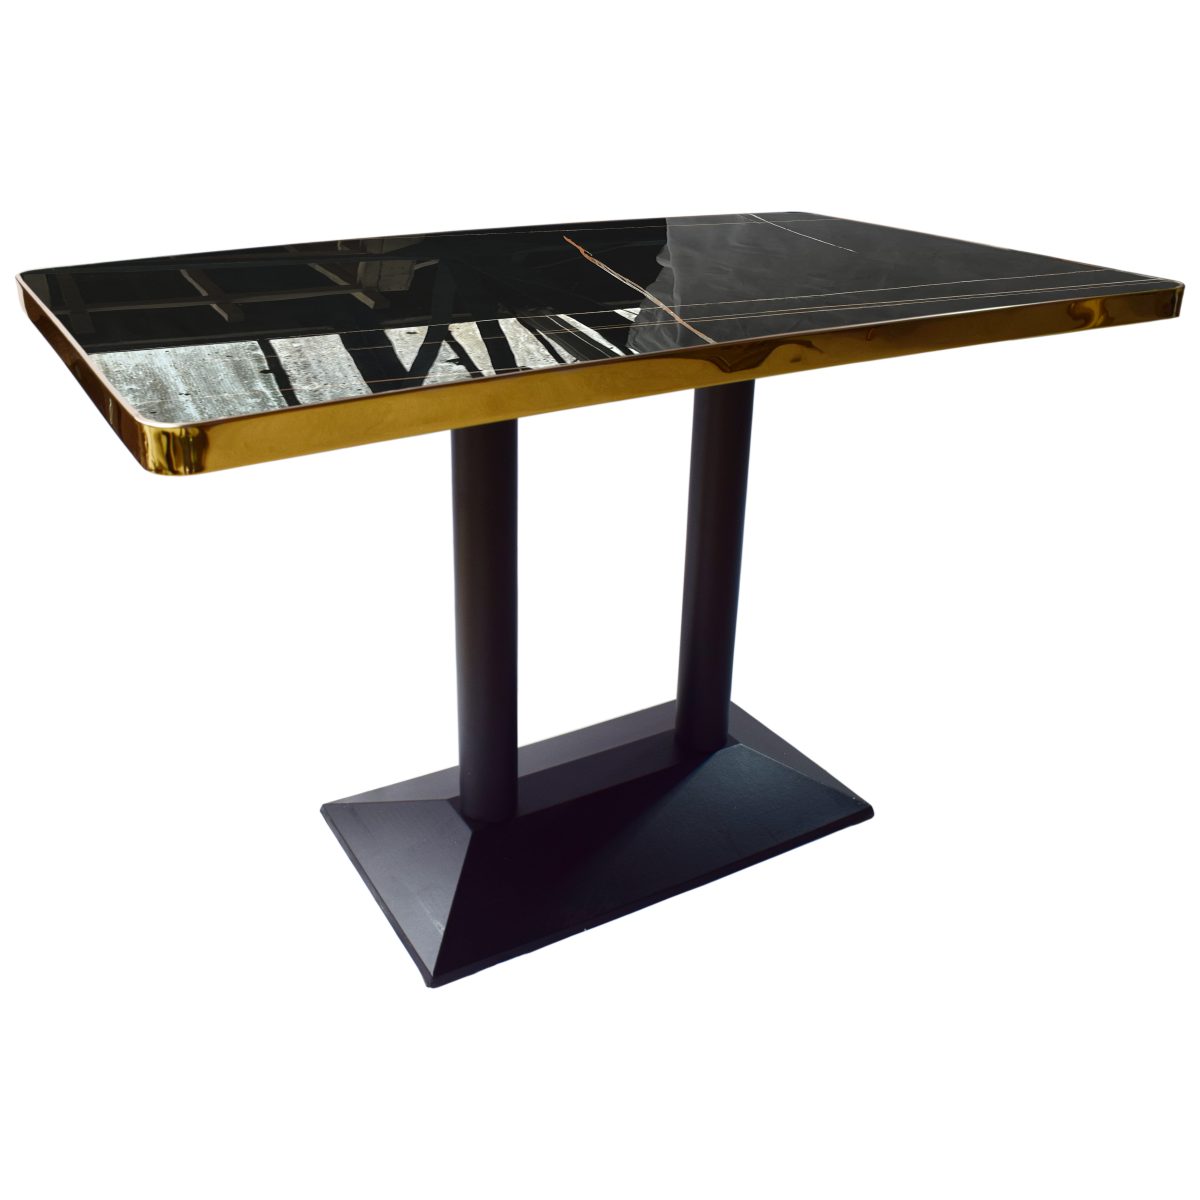 Genuine Marble Tables - Black Cast Iron Legs - Black - Size 120x70cm